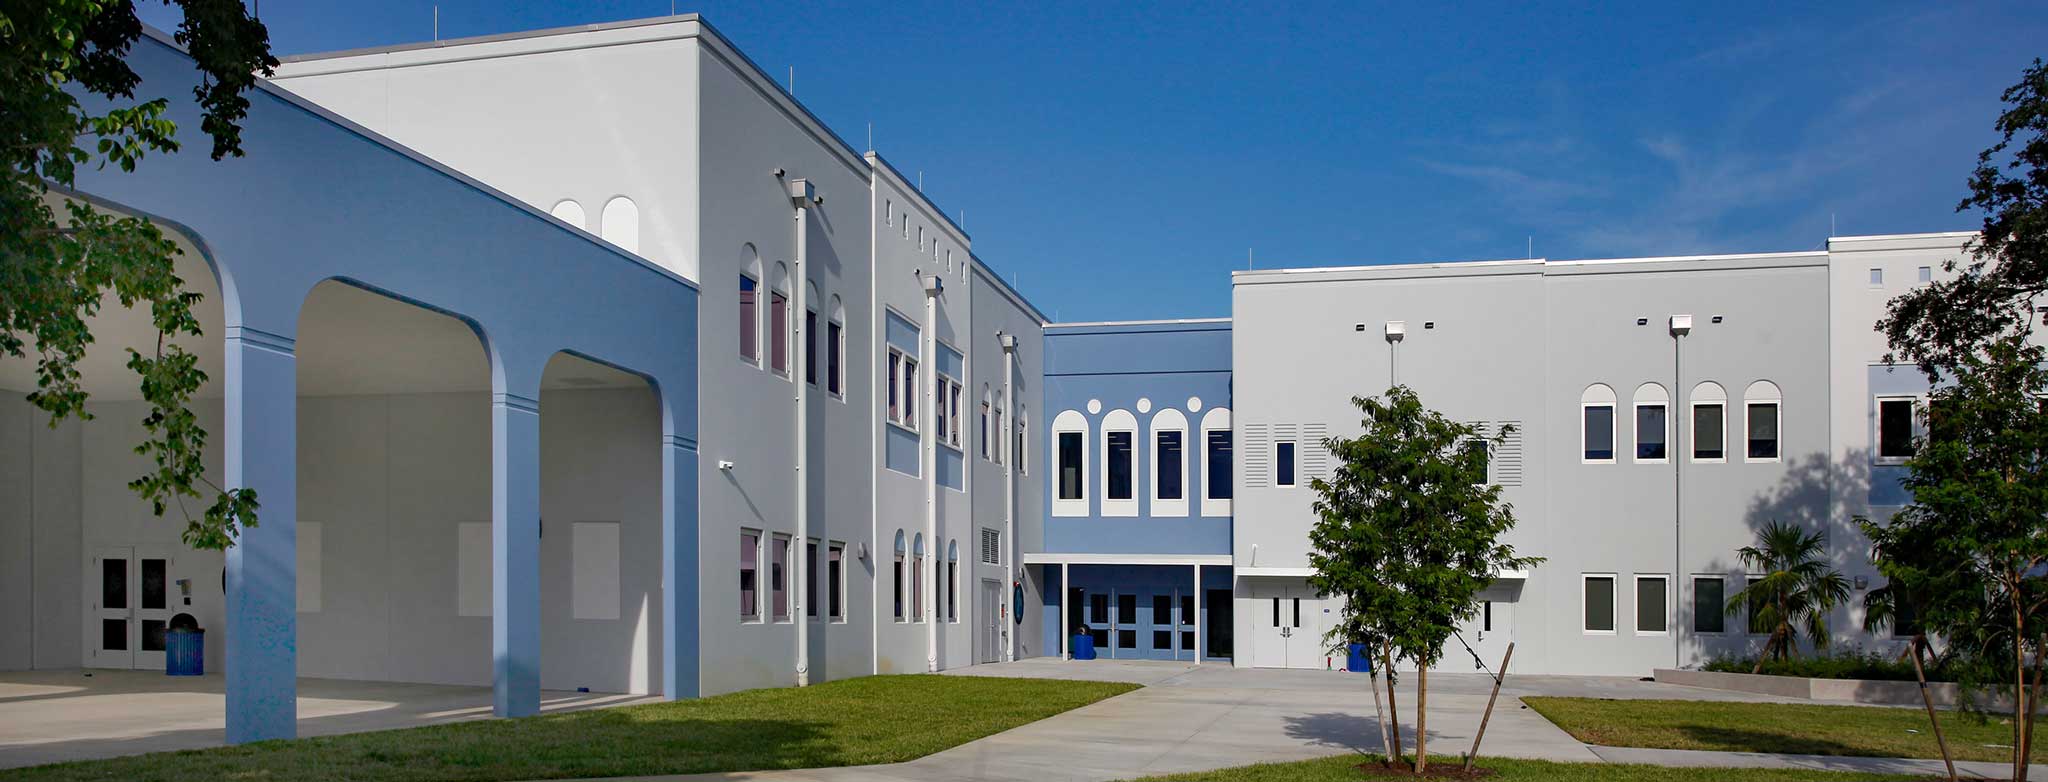 Addison Mizner Elementary School